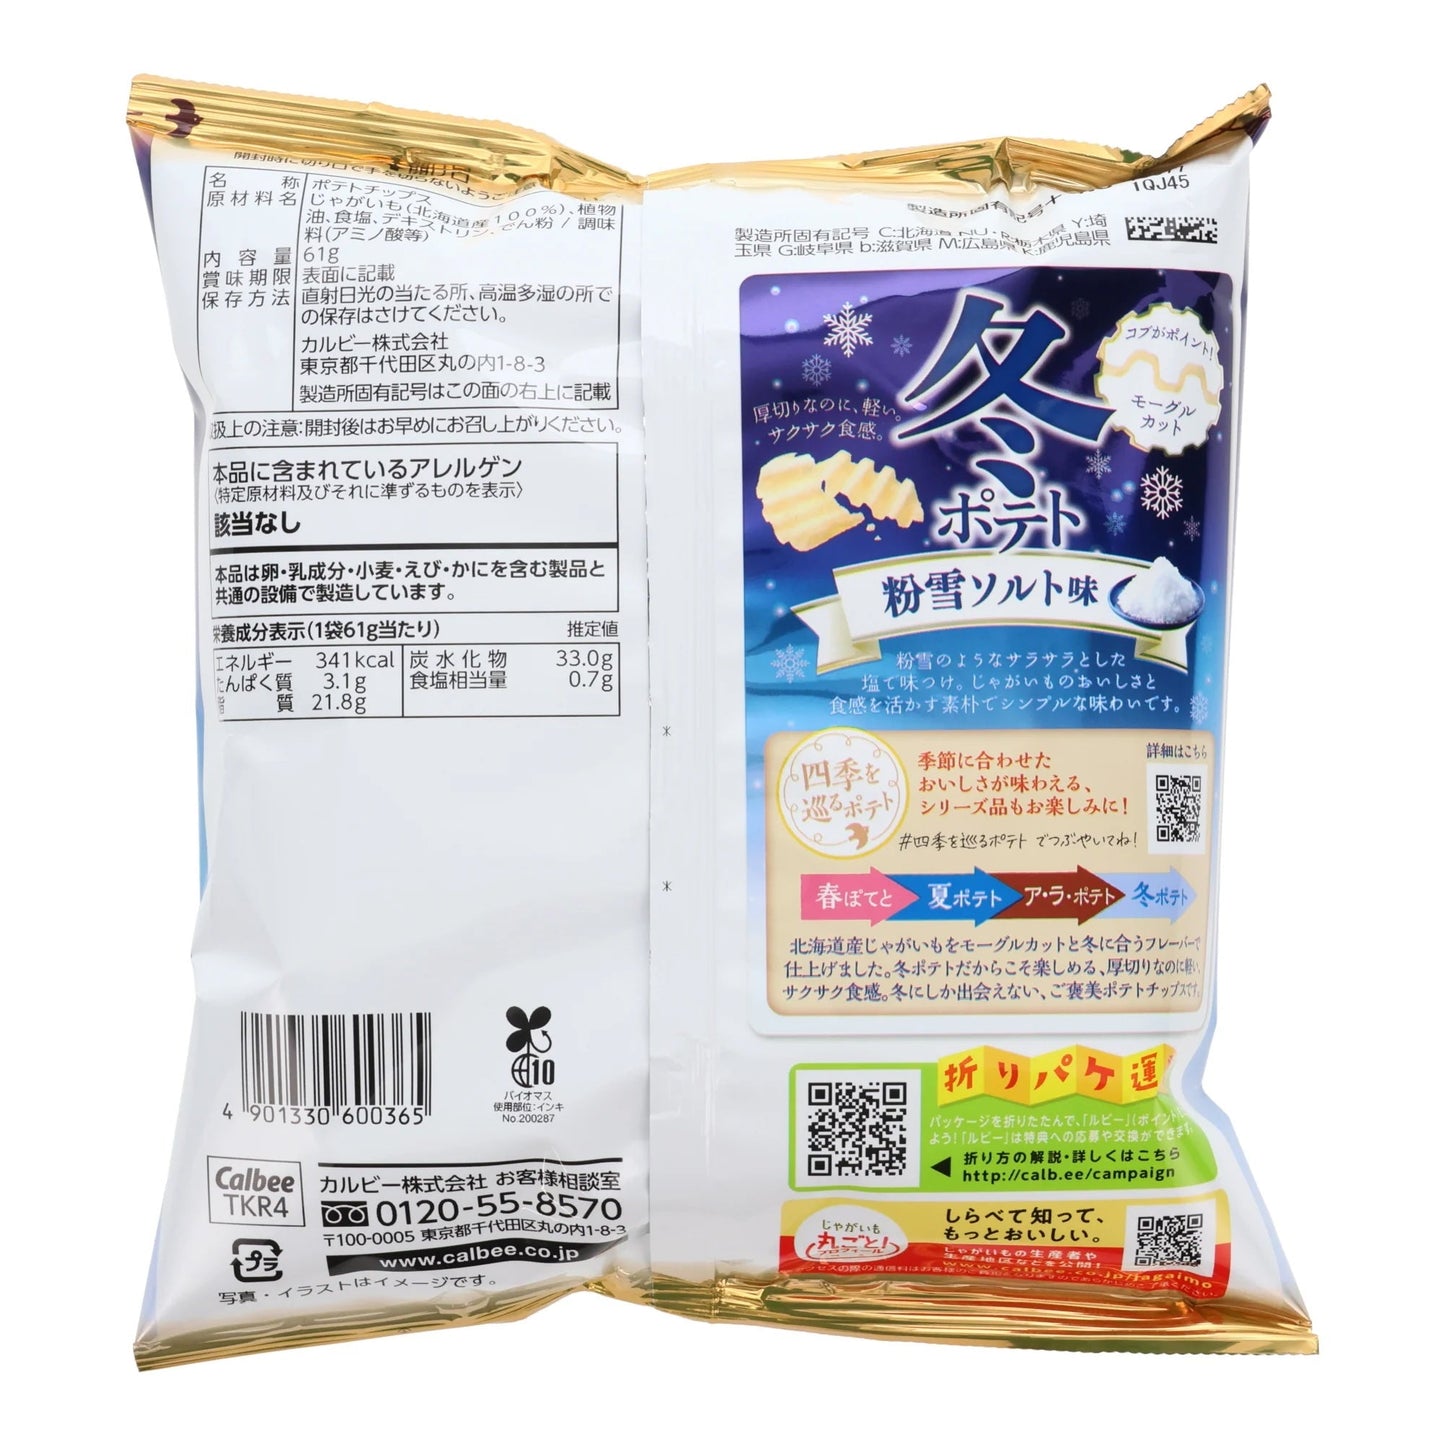 Calbee Potato Chips, Powered Snow Salt (Japan)